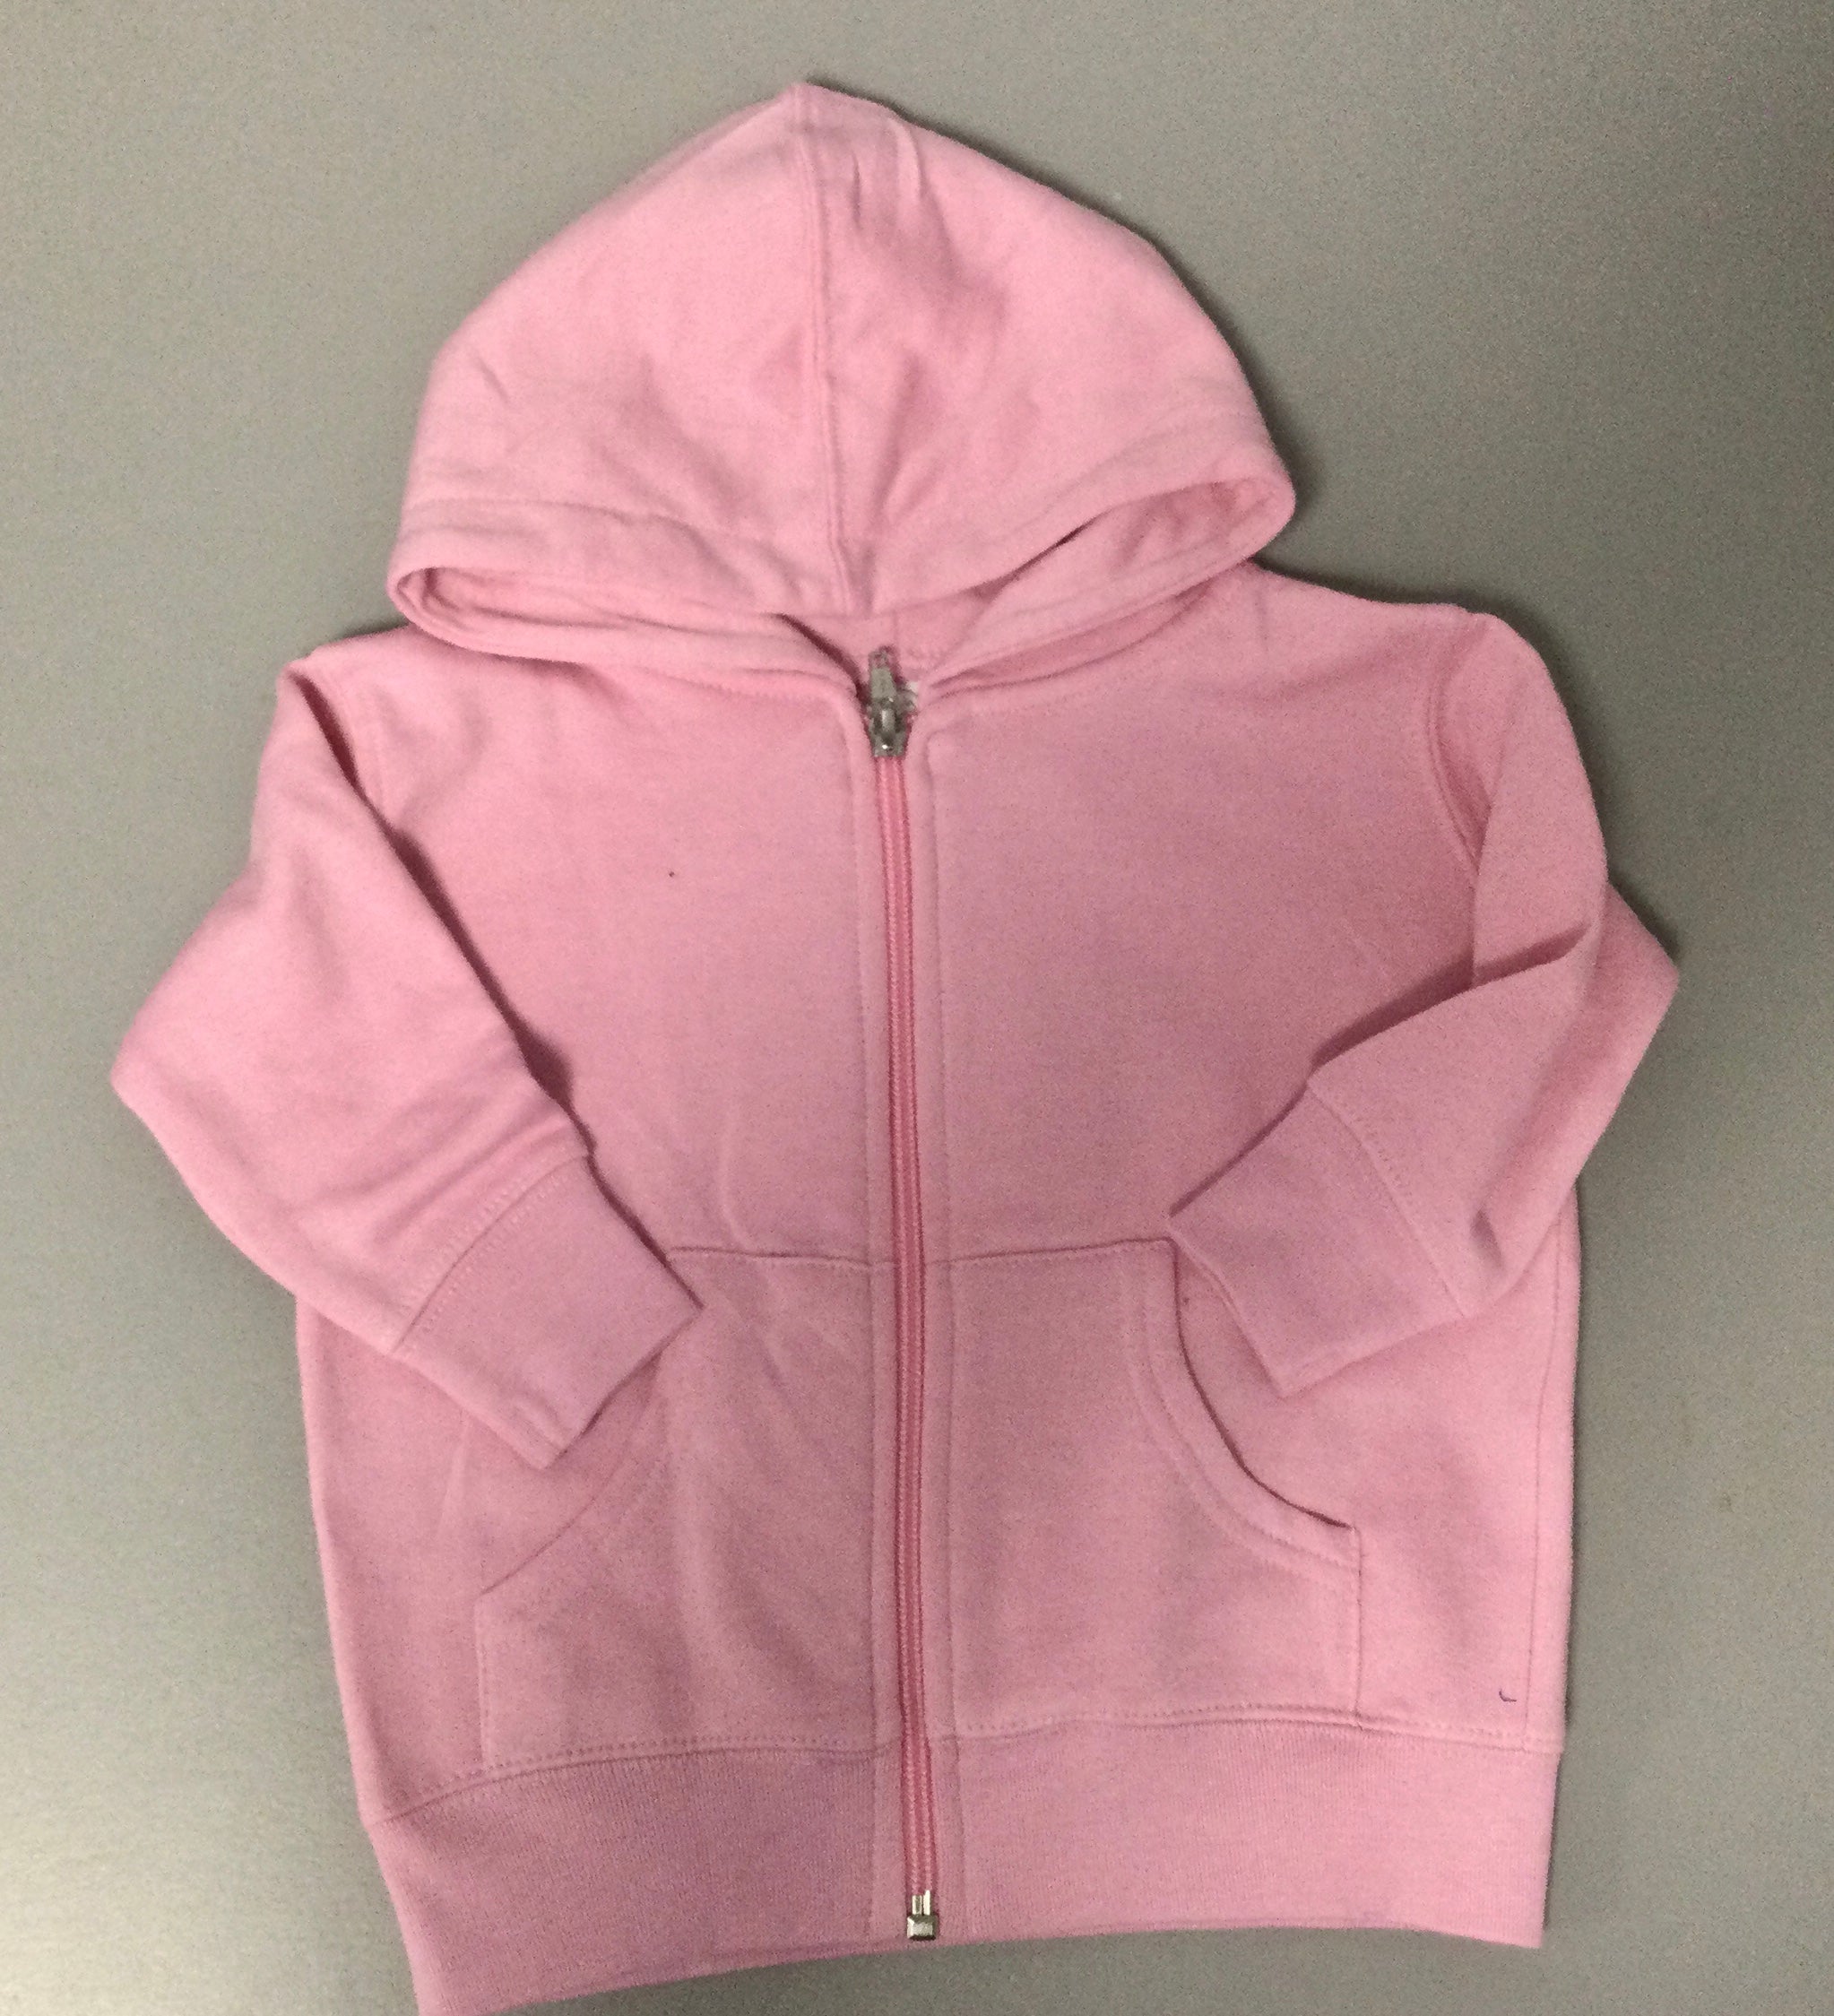 Baby Hooded Zip Up Sweatshirt Pink with Bling Logo